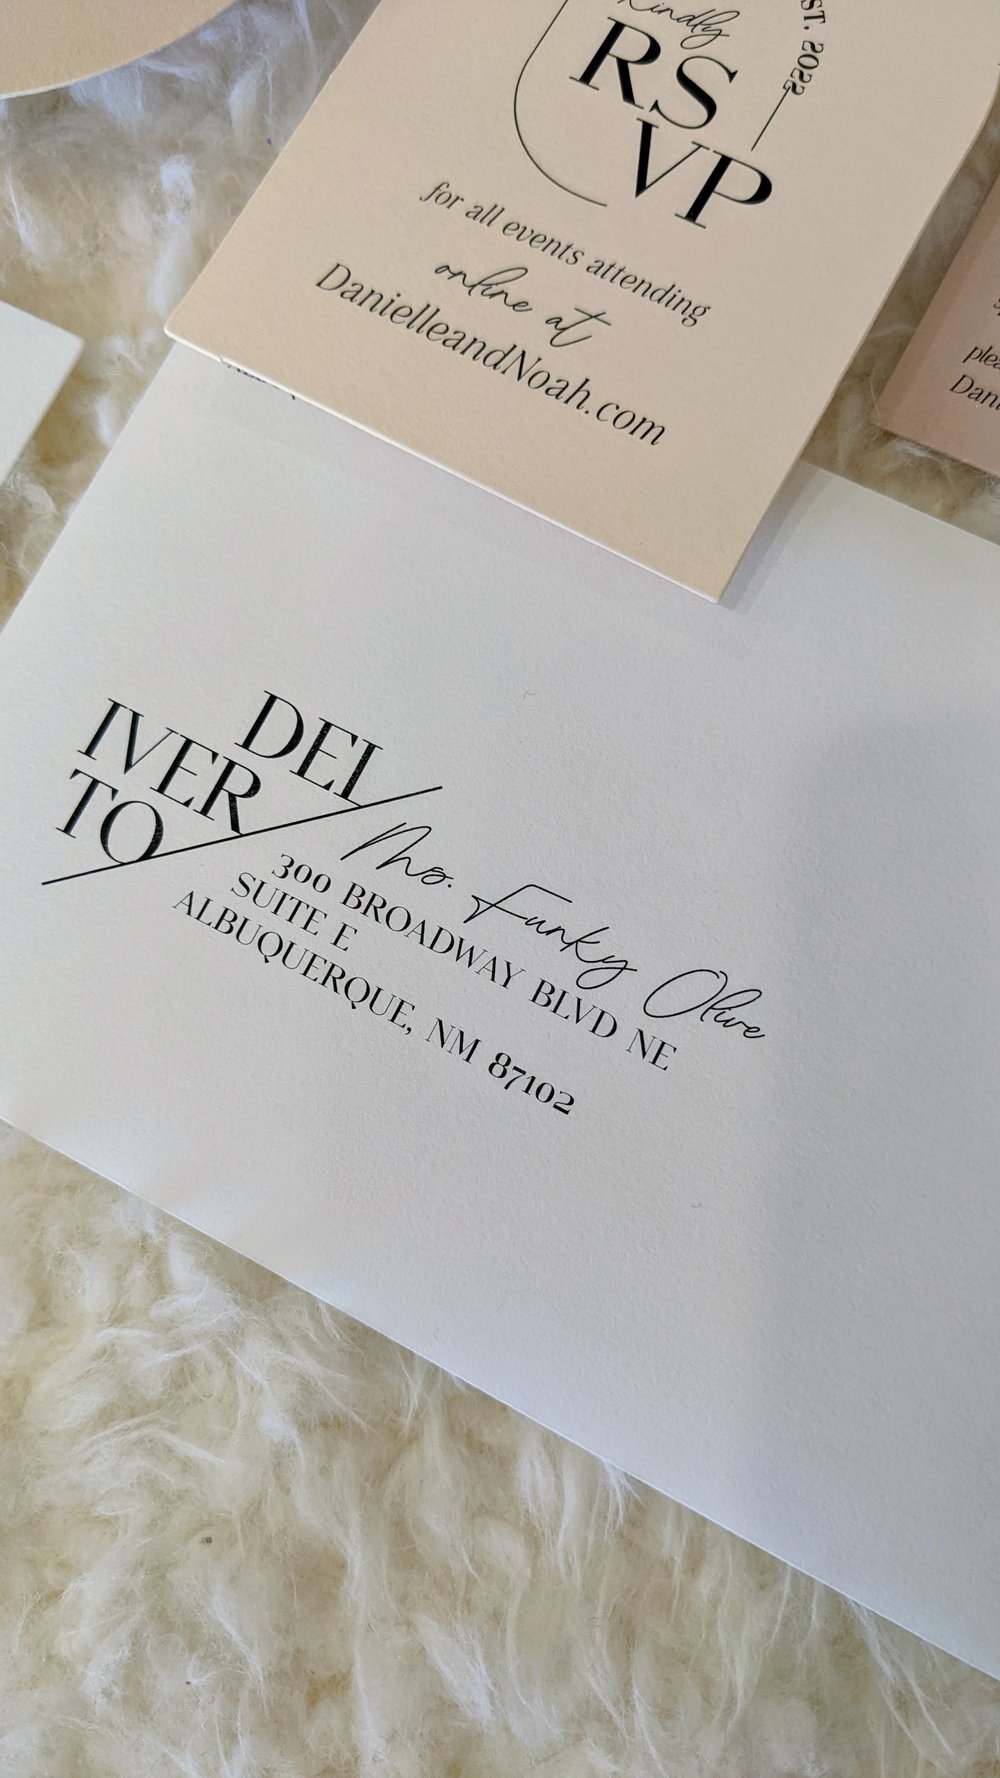 Looking to order wedding envelope seals online?